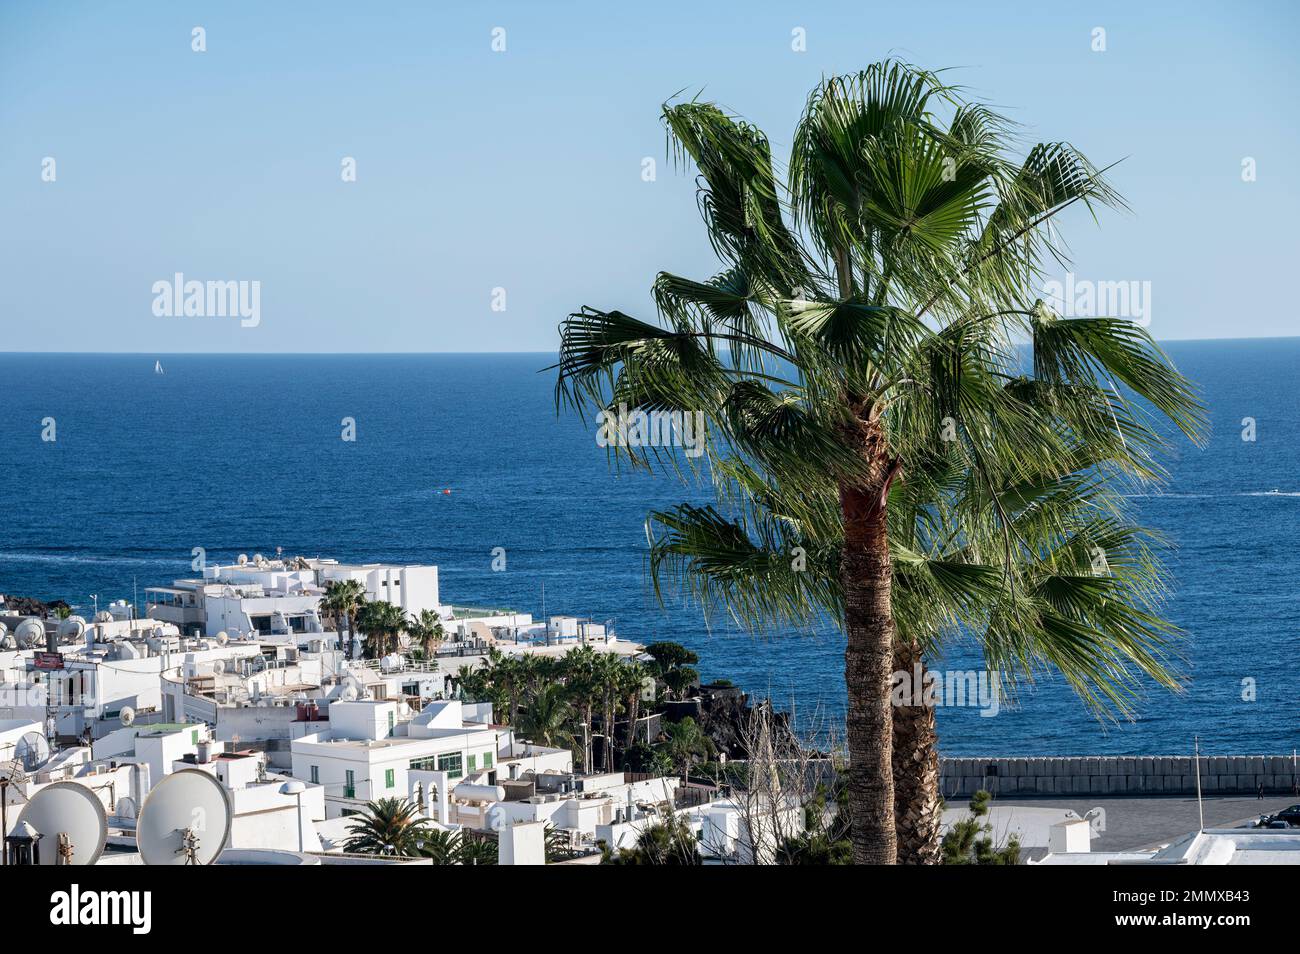 View over harbour area and Ocean in Puerto Del Carmen, Lanzarote, Canary Islands Stock Photo